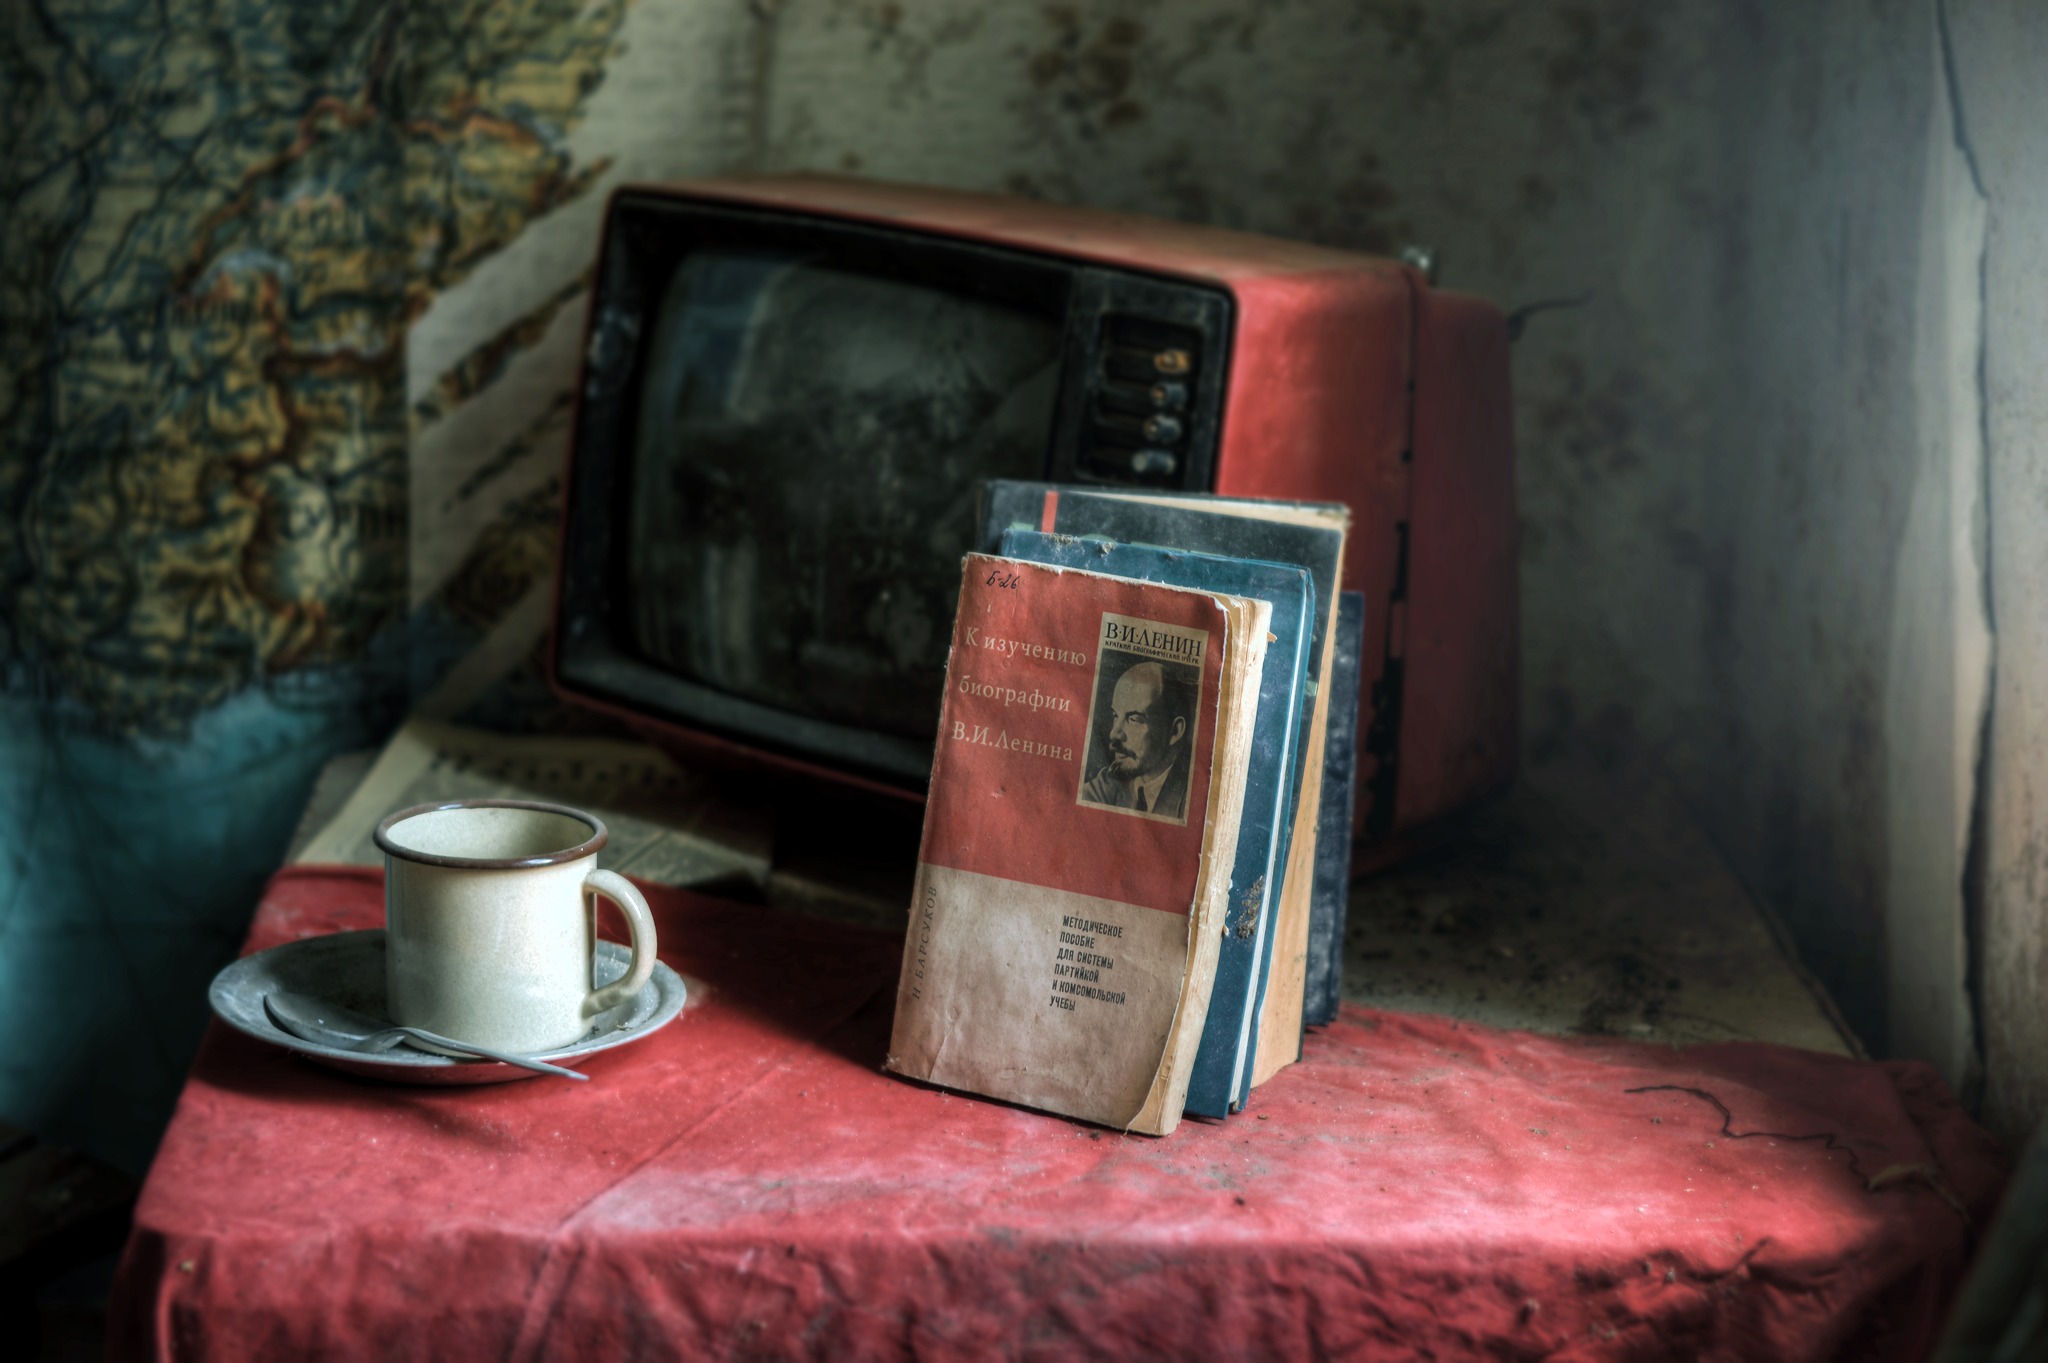 General 2048x1363 still life cup TV table books dust Vladimir Lenin Russian USSR spoon plates indoors